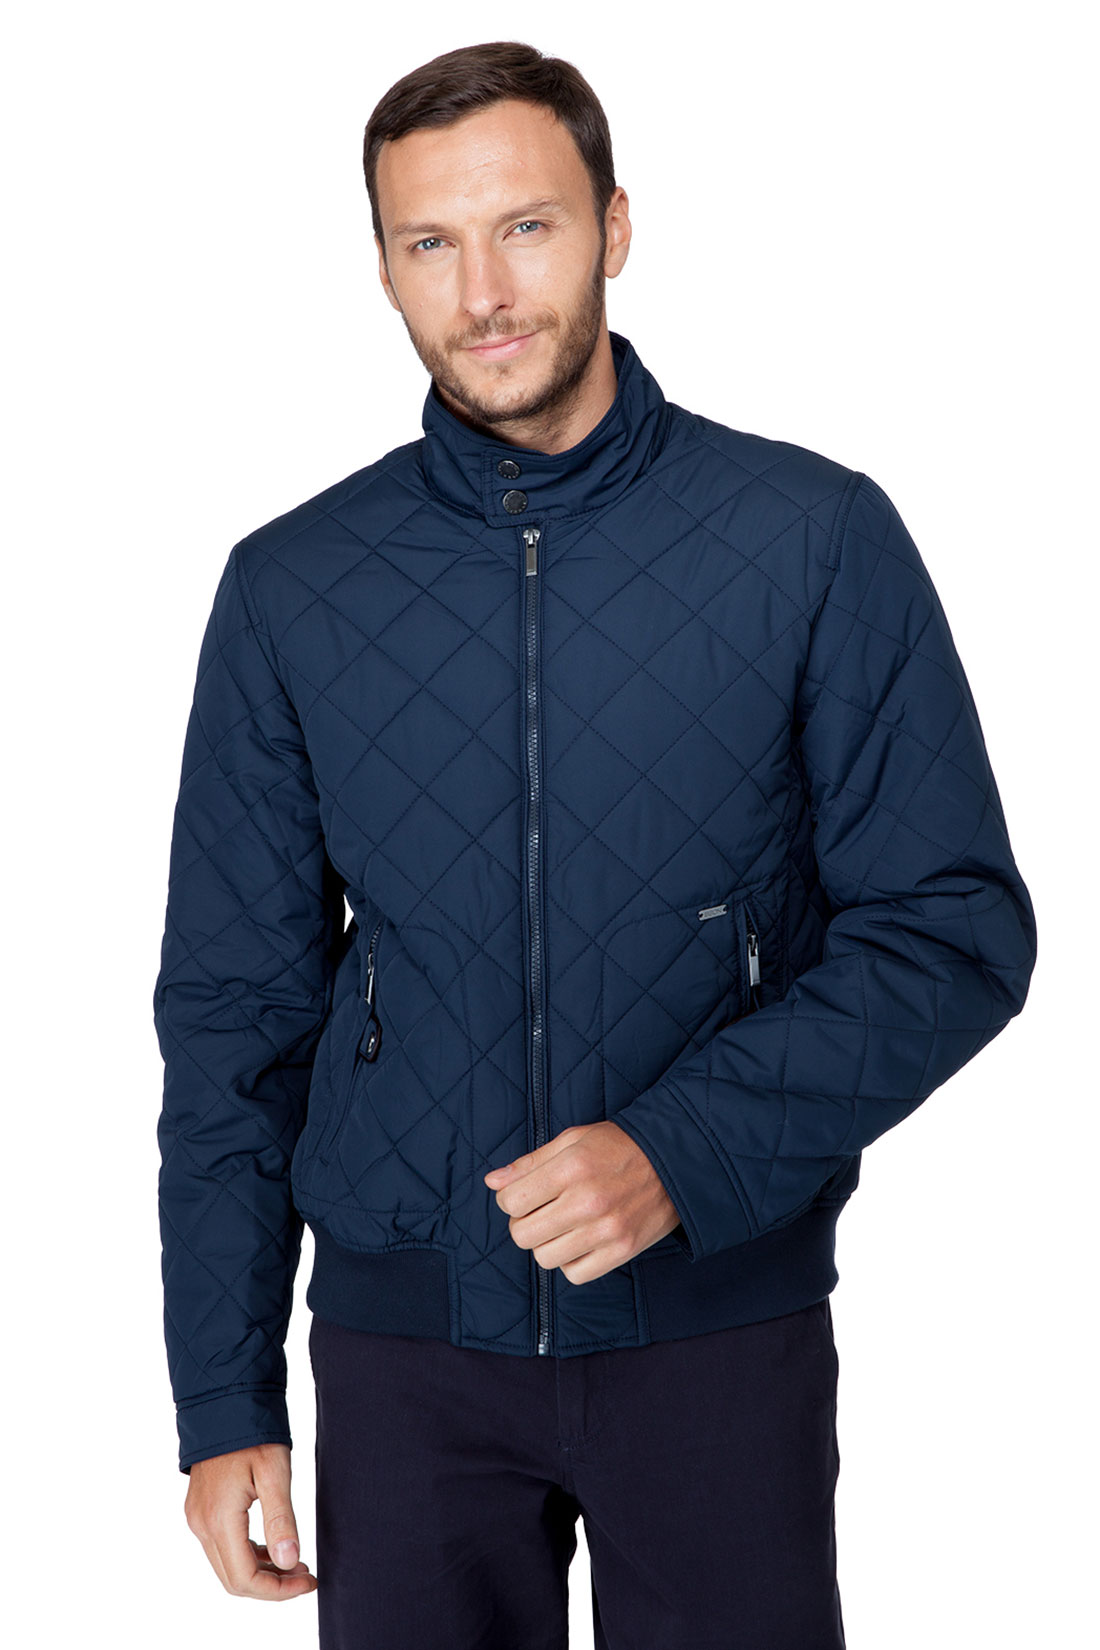 Стёганая куртка с резинкой-рибана (арт. baon B537018), размер XL, цвет синий Стёганая куртка с резинкой-рибана (арт. baon B537018) - фото 1